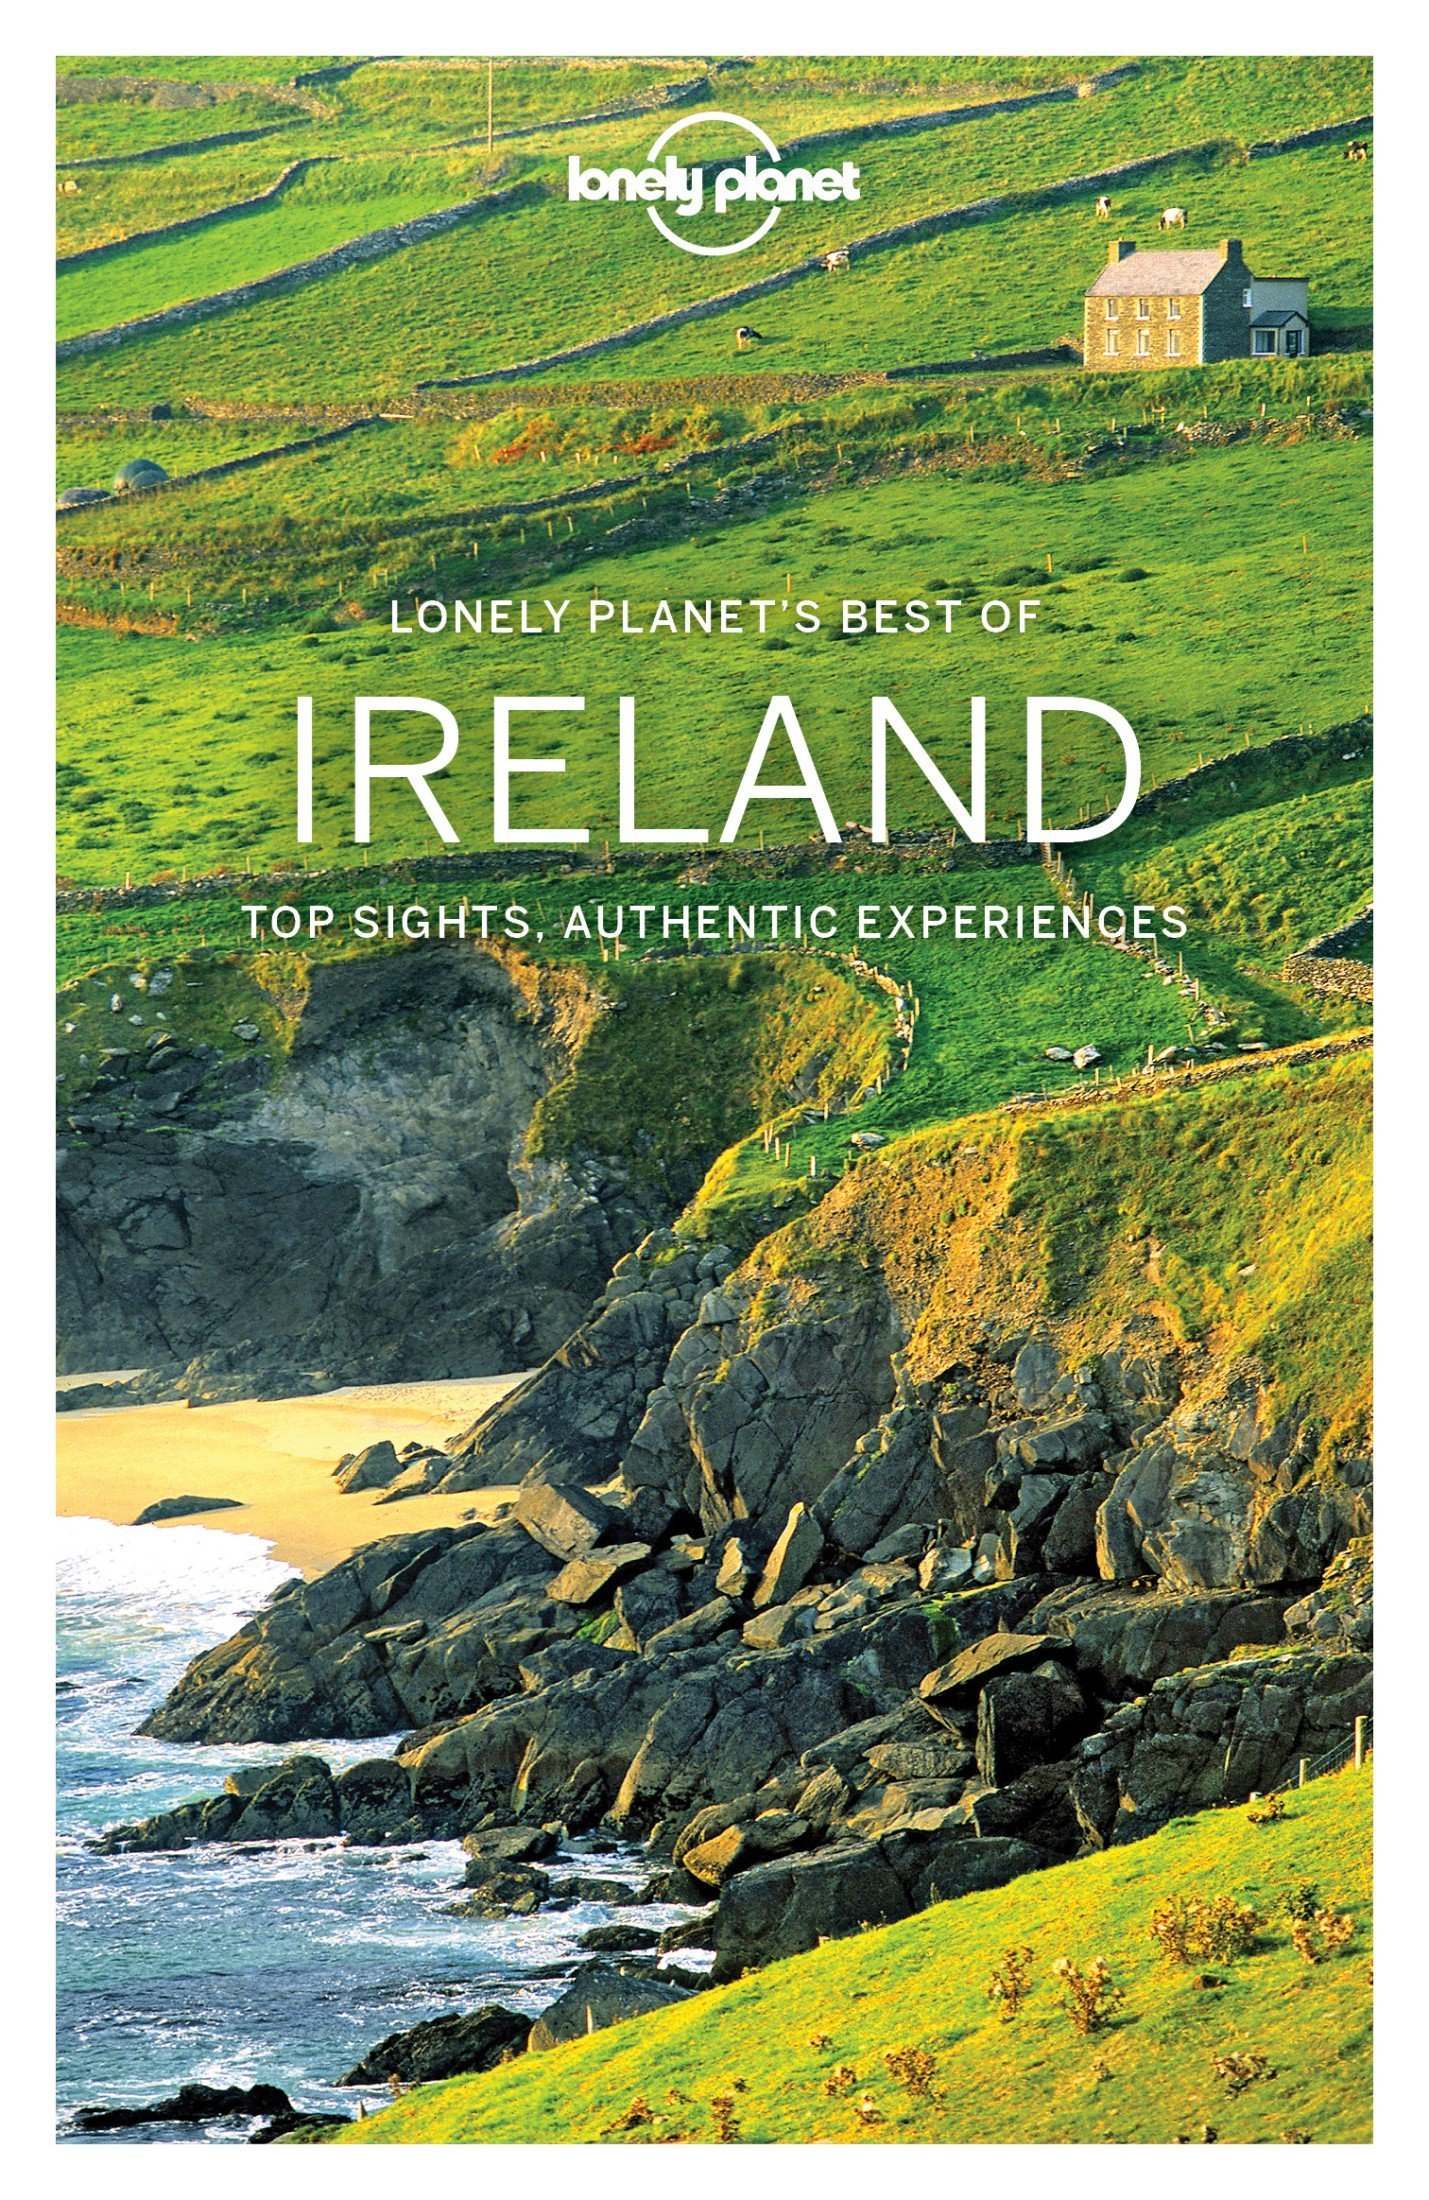 ireland travel guide book free